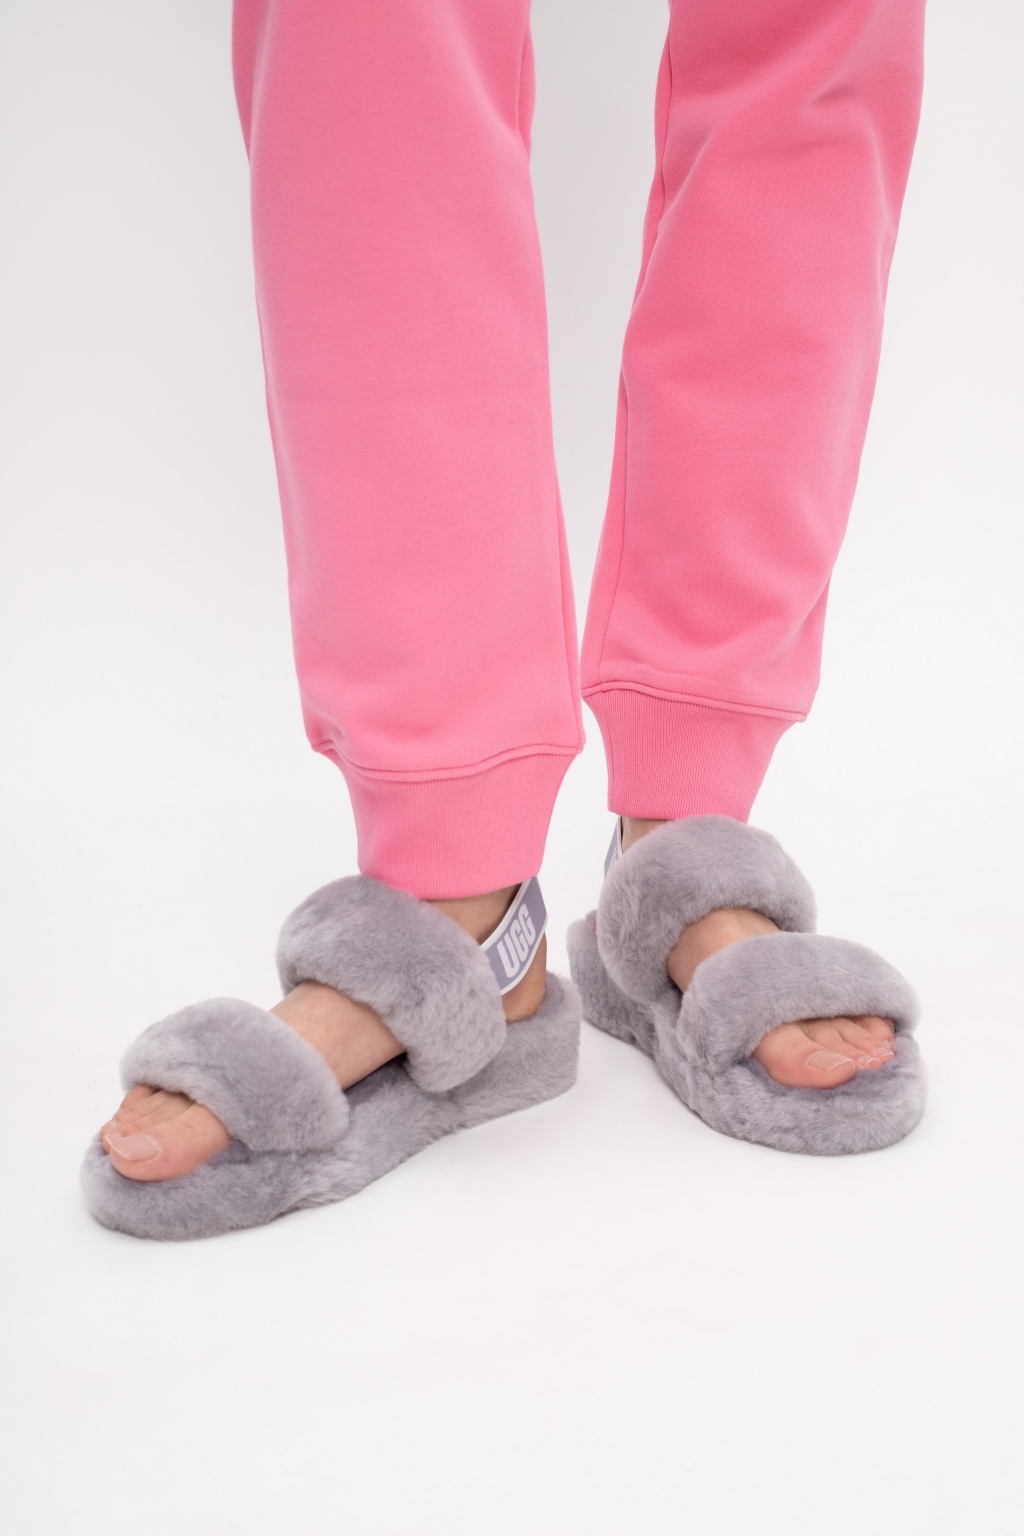 ugg klm ‘Oh Yeah’ fur sandals